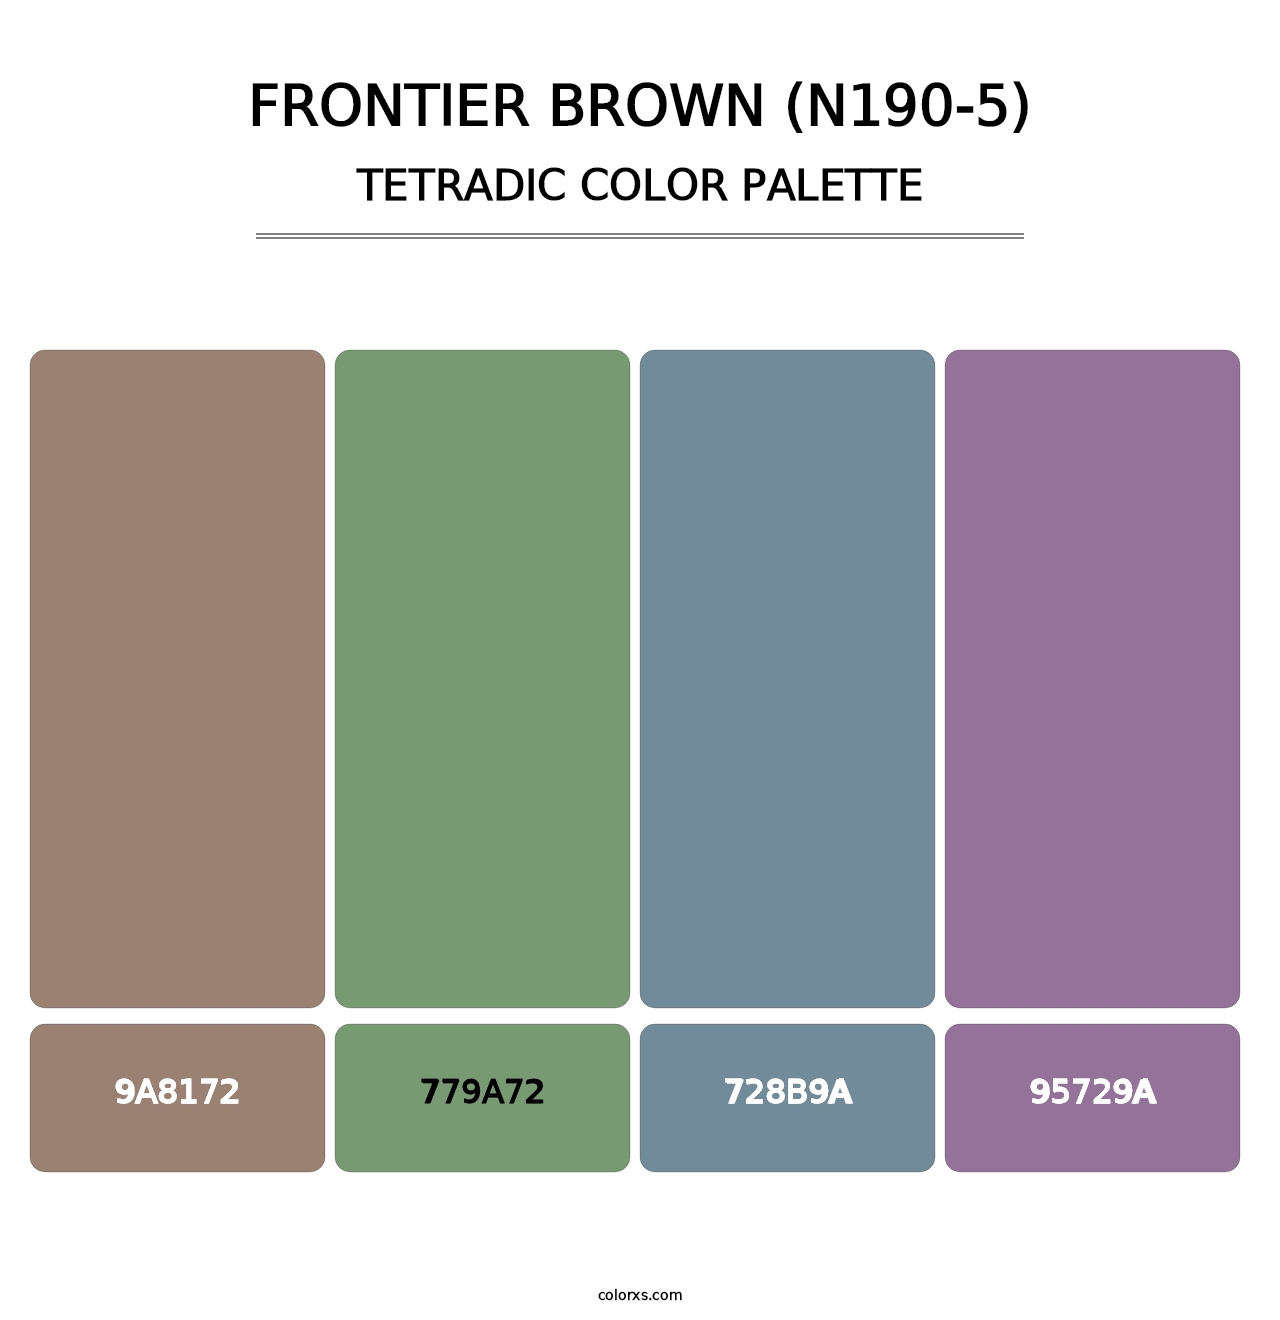 Frontier Brown (N190-5) - Tetradic Color Palette